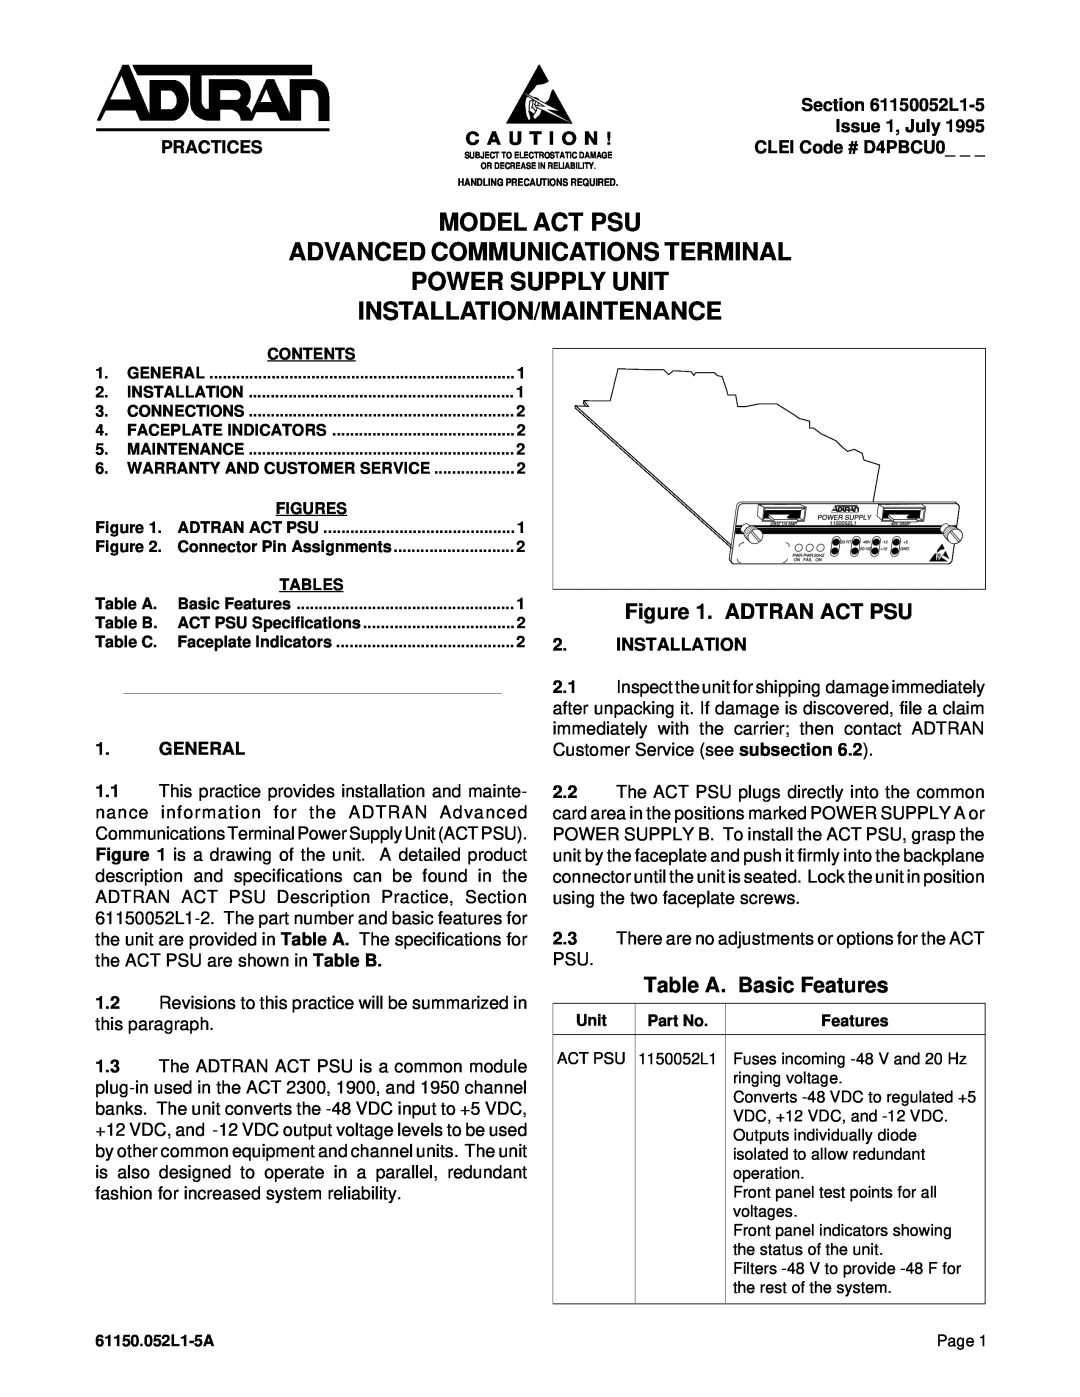 ADTRAN D4PBCU0 warranty Adtran Act Psu, Table A. Basic Features, Installation/Maintenance 